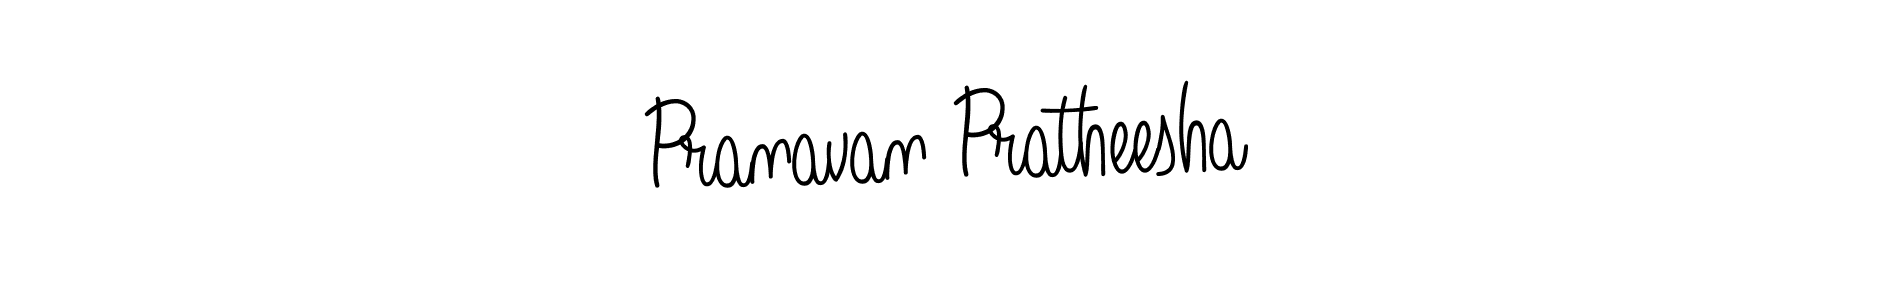 How to make Pranavan Pratheesha signature? Angelique-Rose-font-FFP is a professional autograph style. Create handwritten signature for Pranavan Pratheesha name. Pranavan Pratheesha signature style 5 images and pictures png